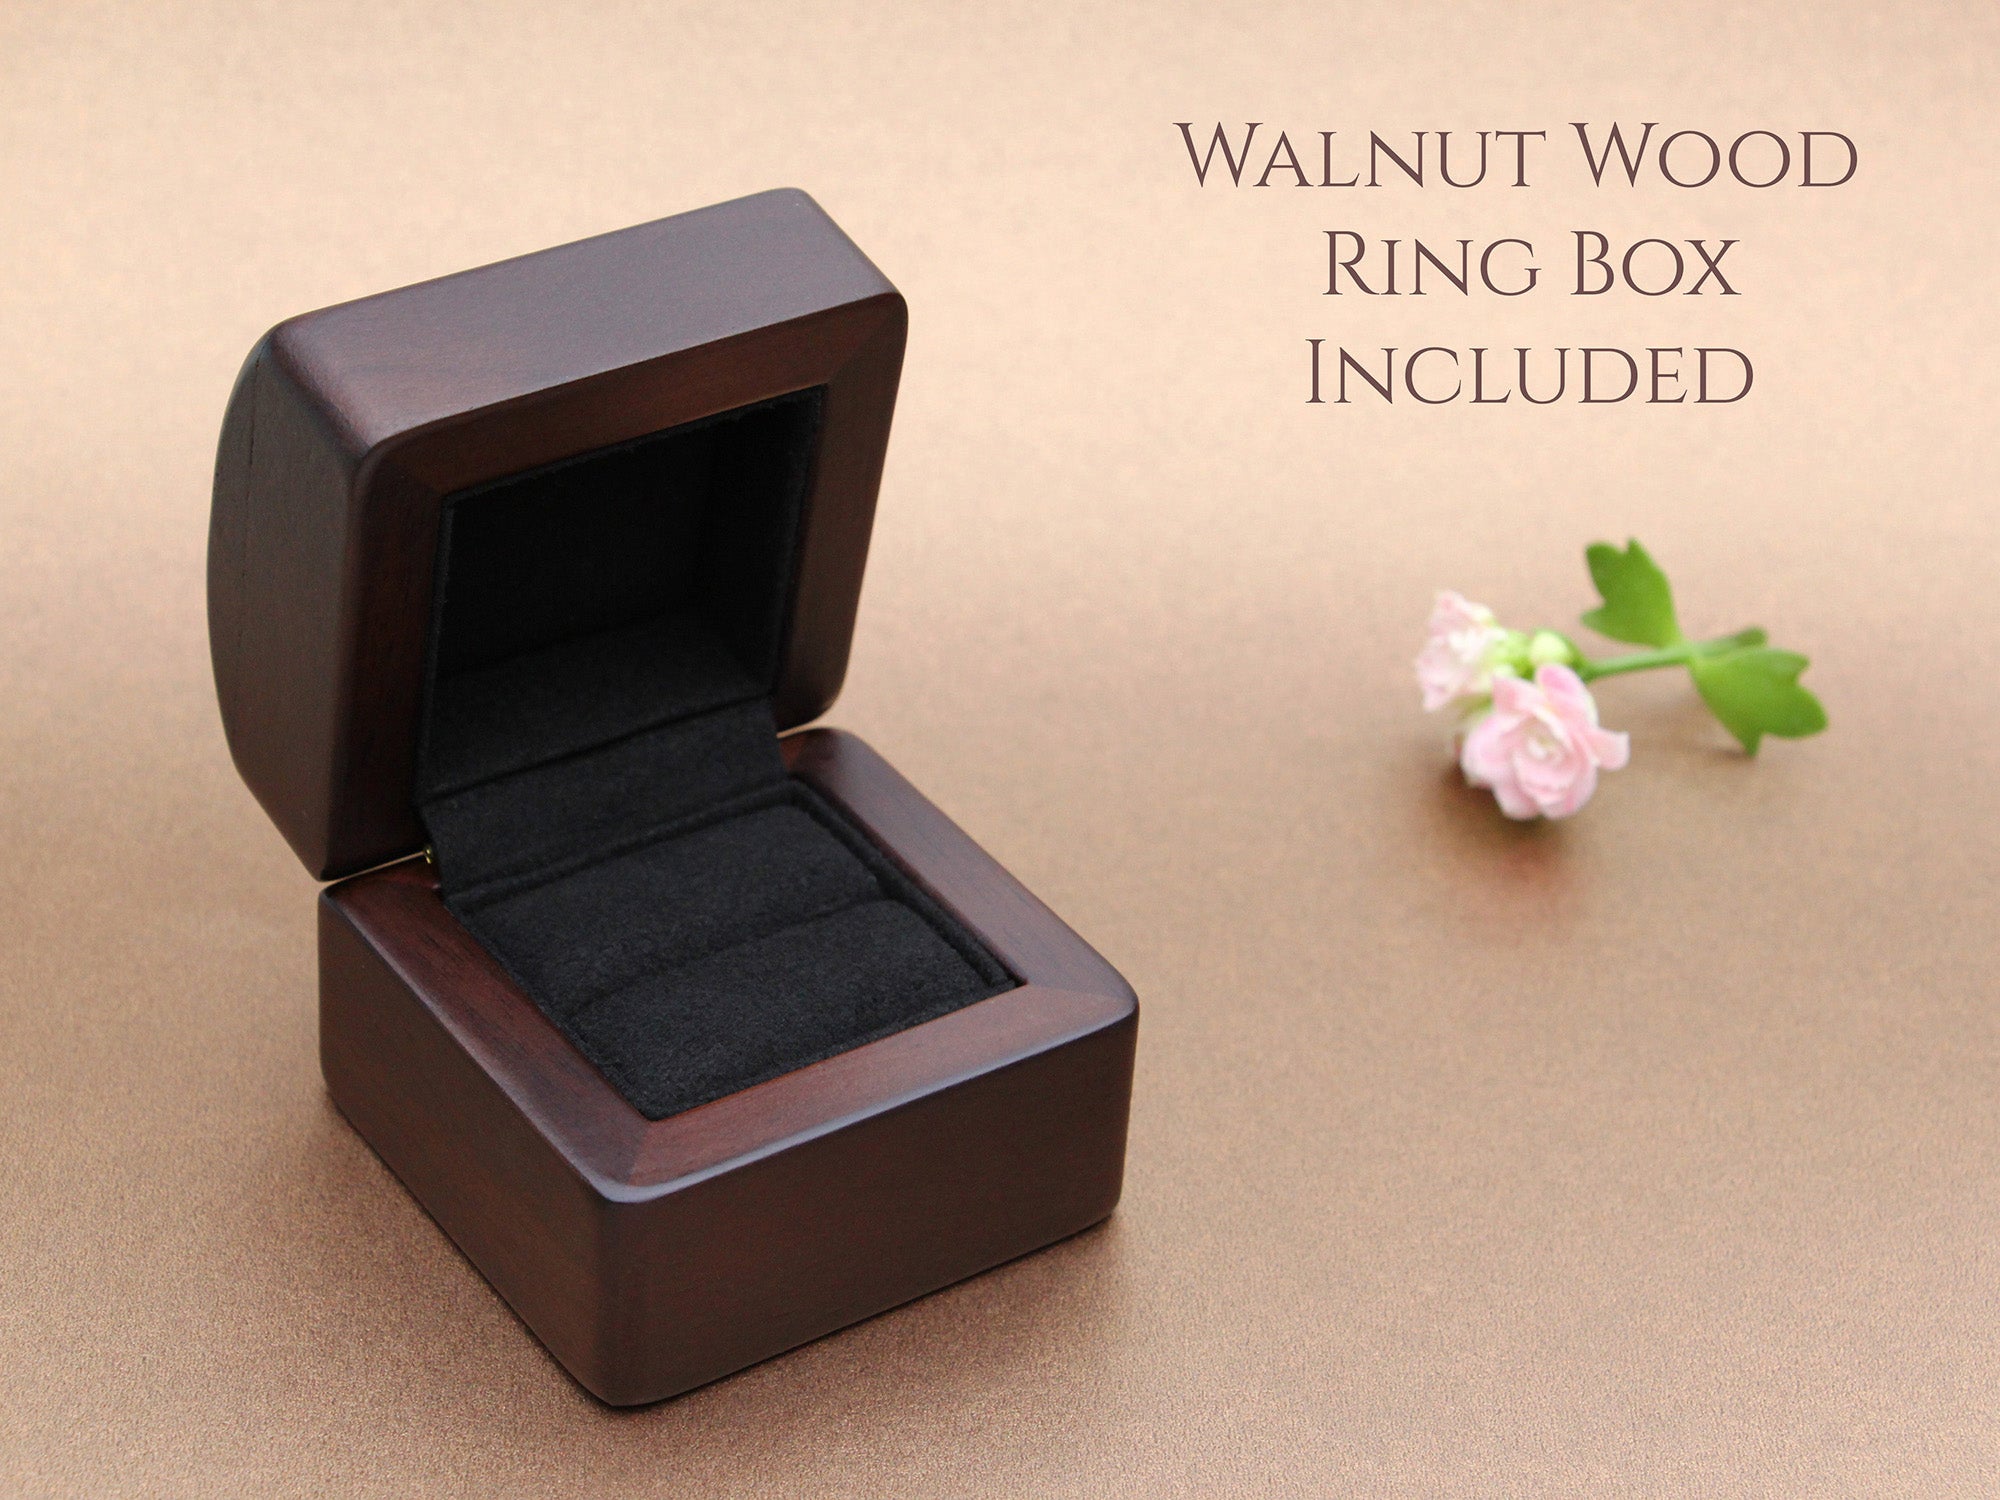 free walnut wood ring box included, Luxury wooden wedding ring box